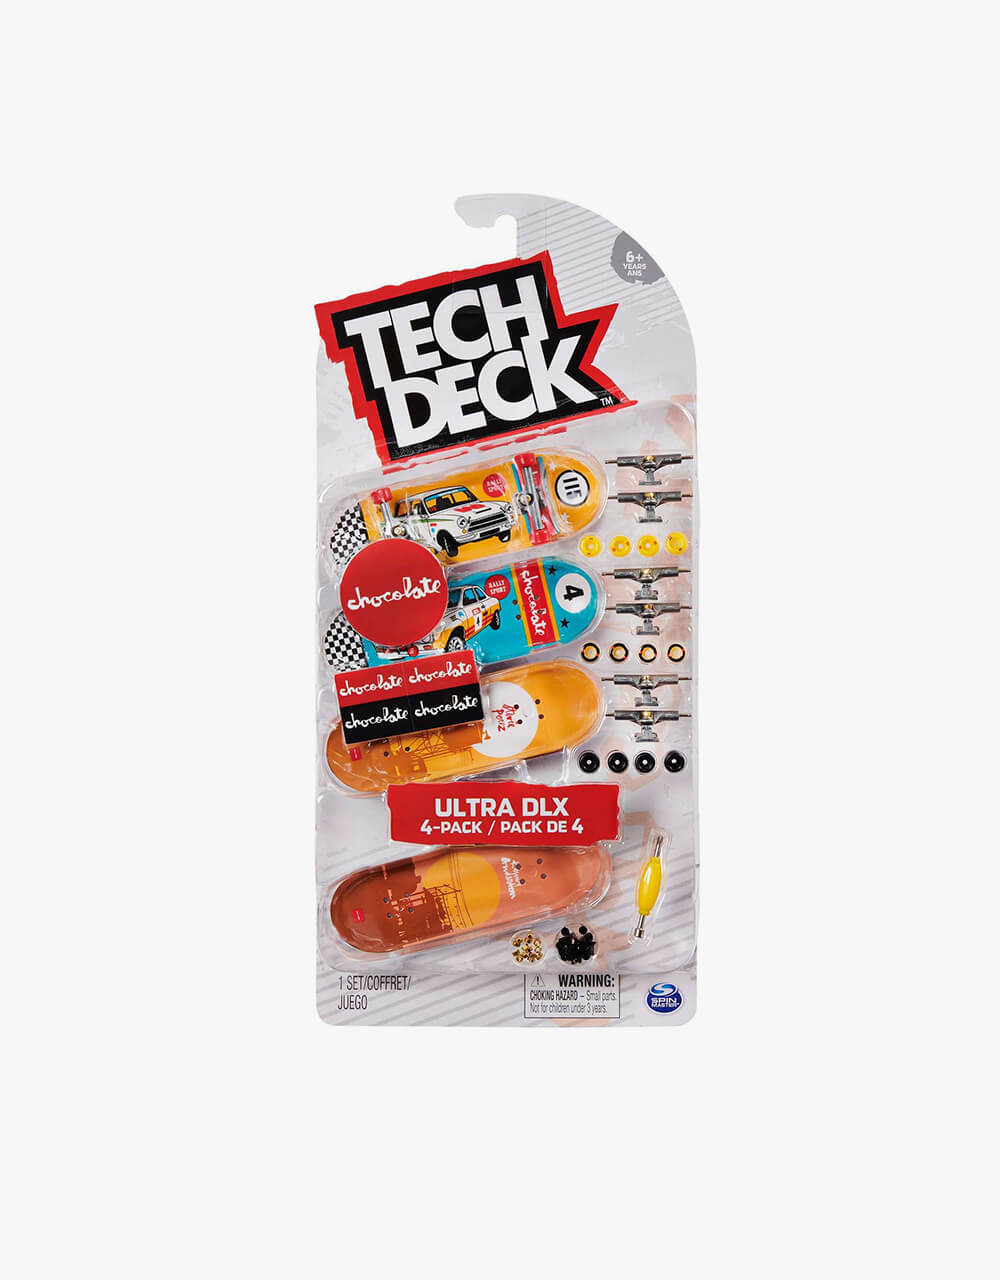 Tech Deck Fingerboard Ultra DLX 4 Pack - Chocolate